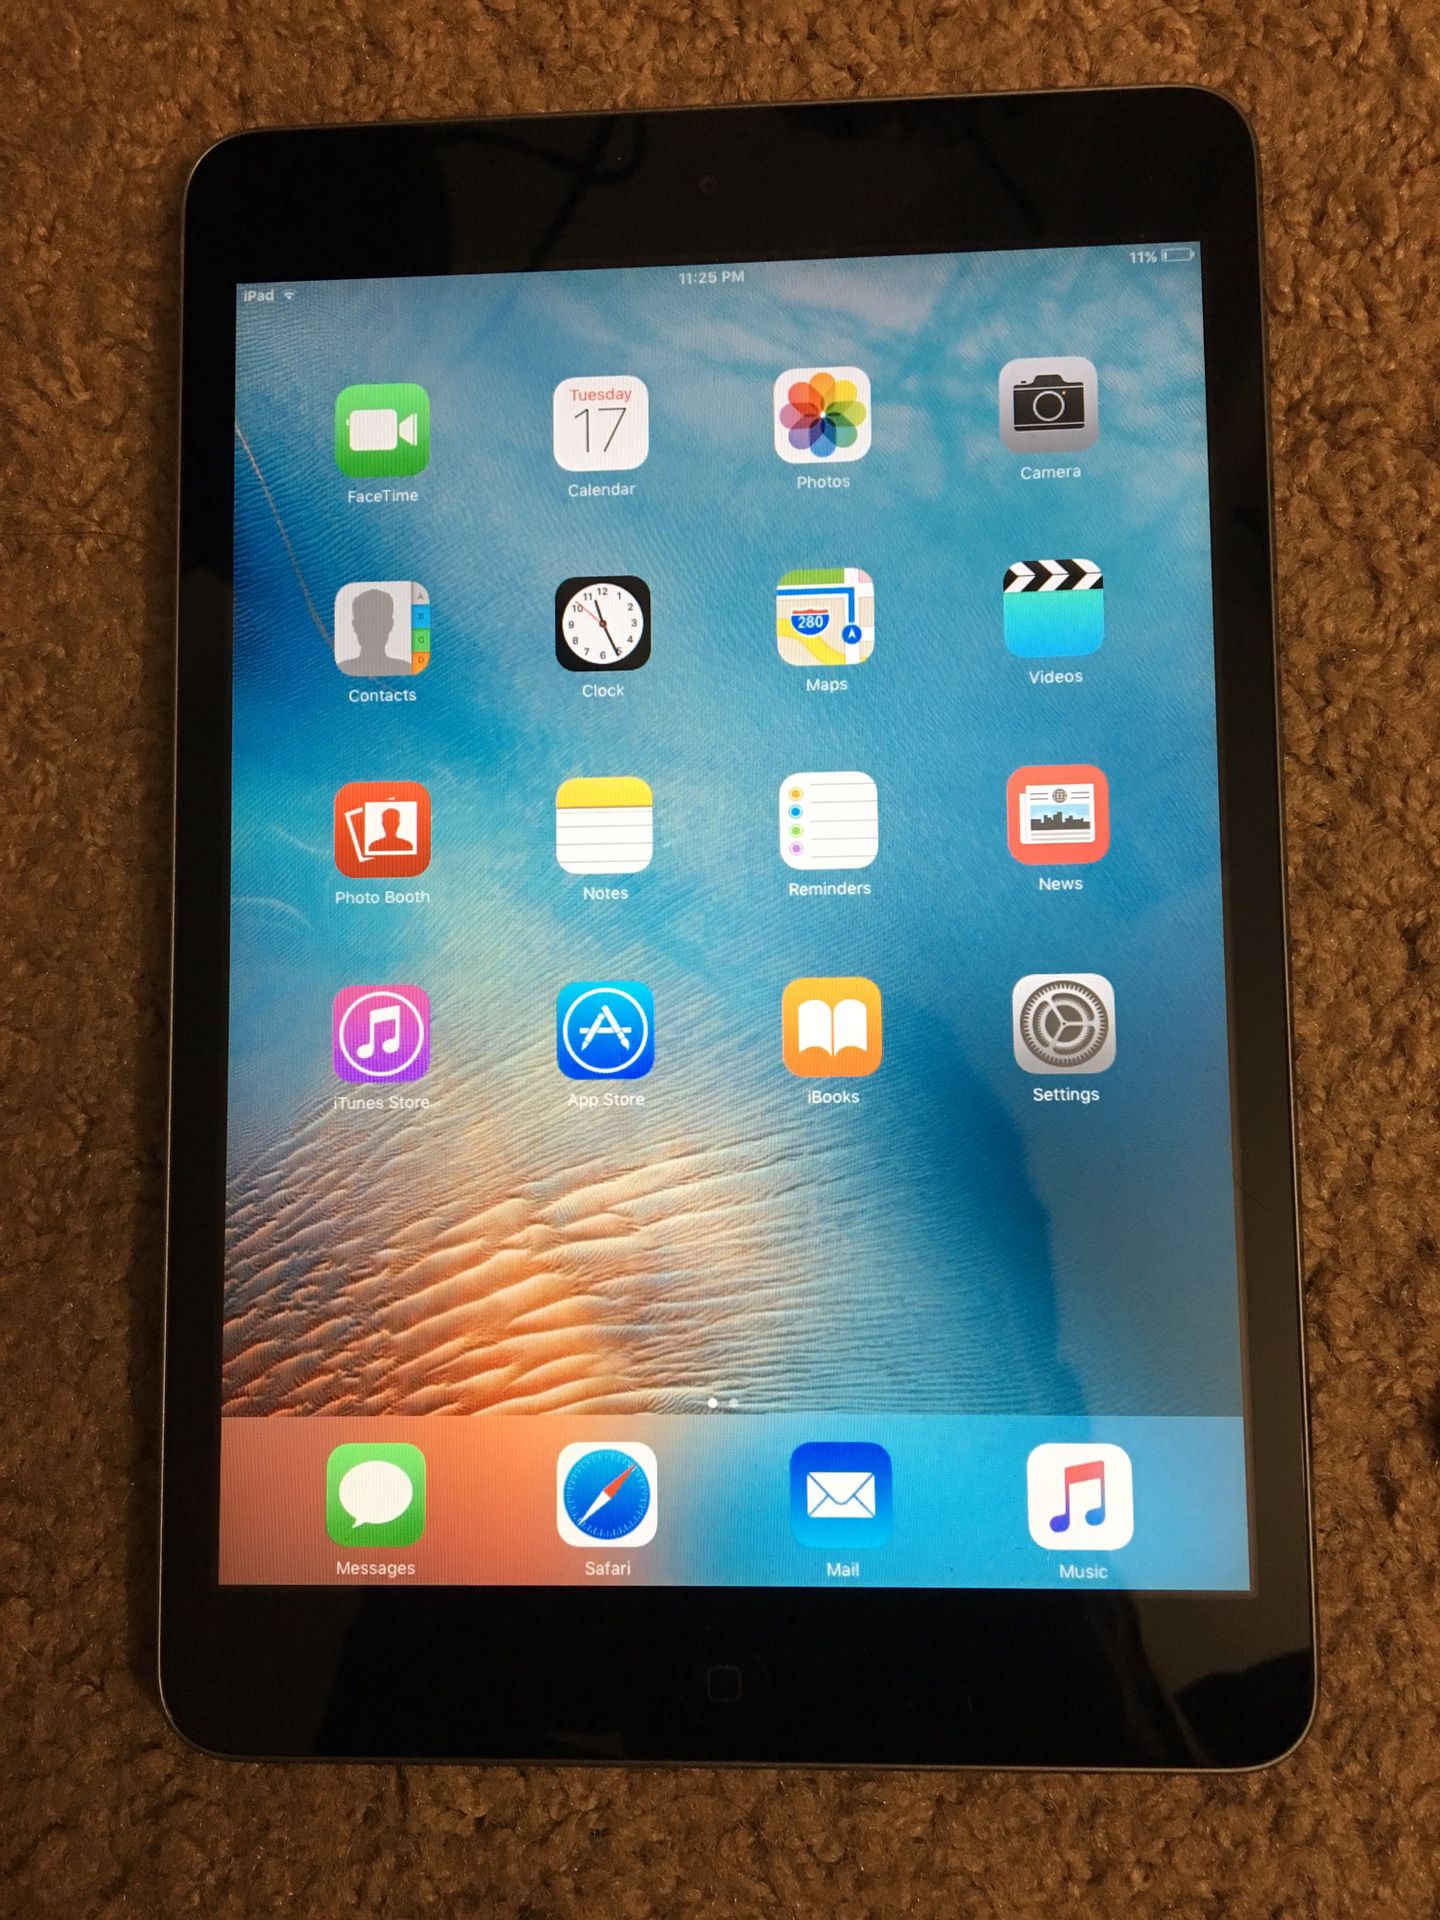 iPad mini clean and unlocked